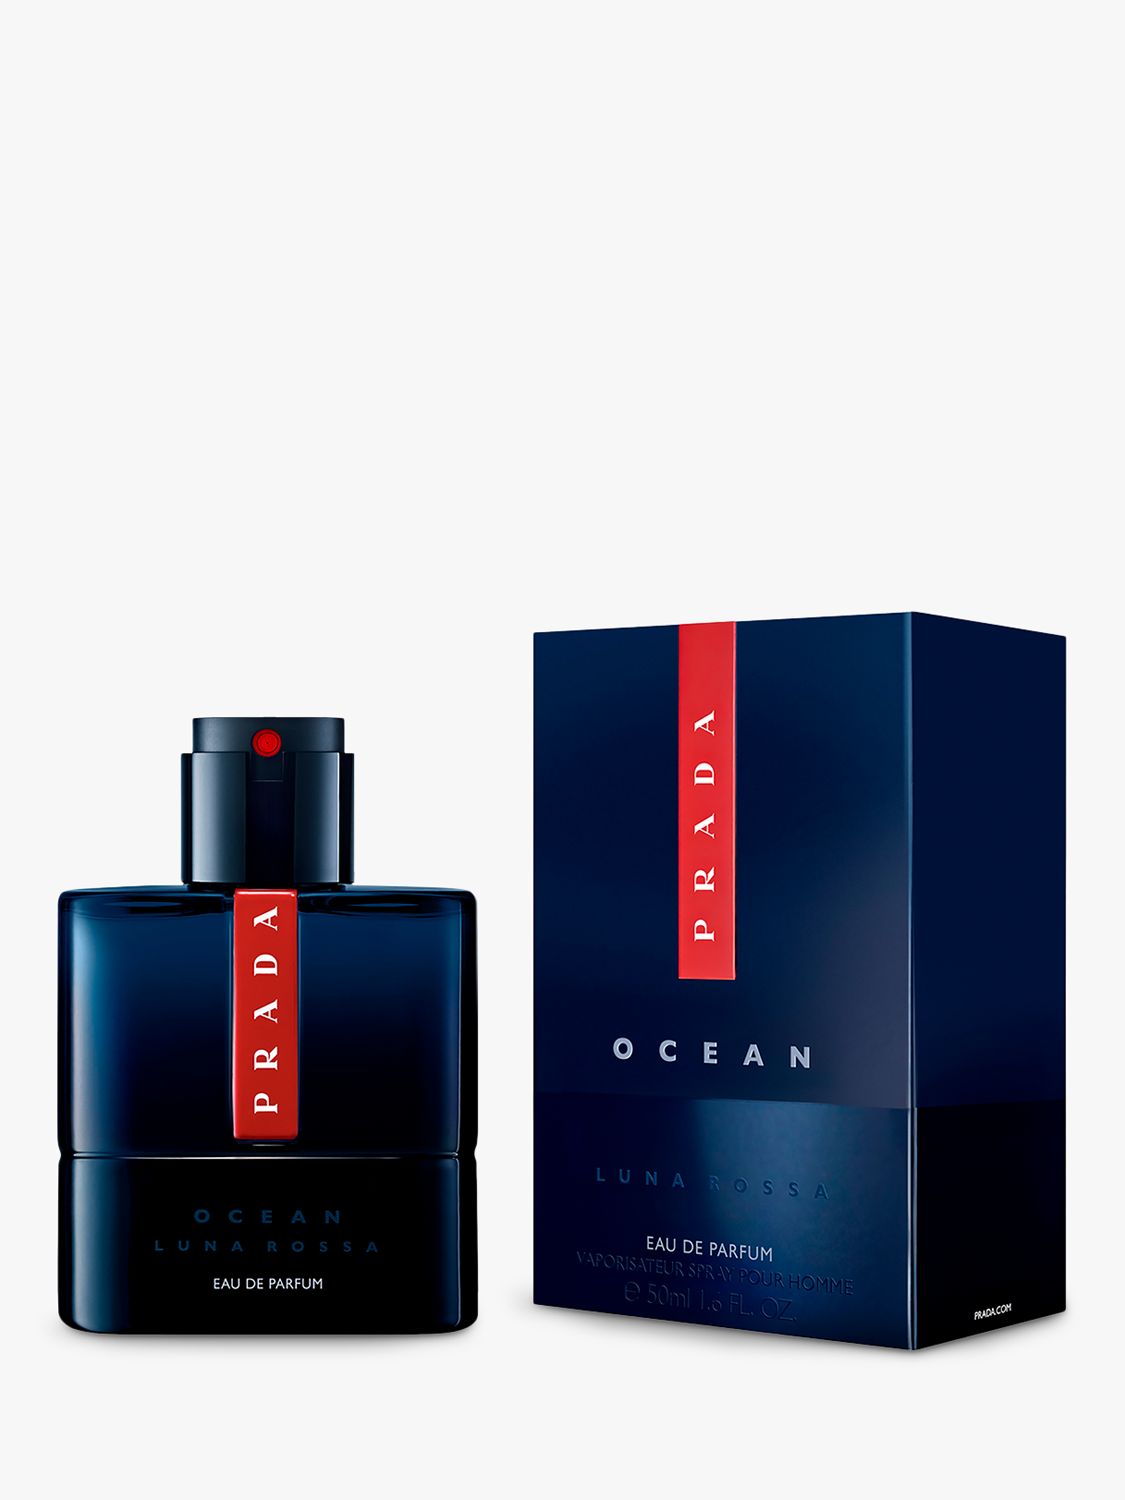 Prada Luna Rossa Ocean Eau de Parfum, 50ml at John Lewis & Partners